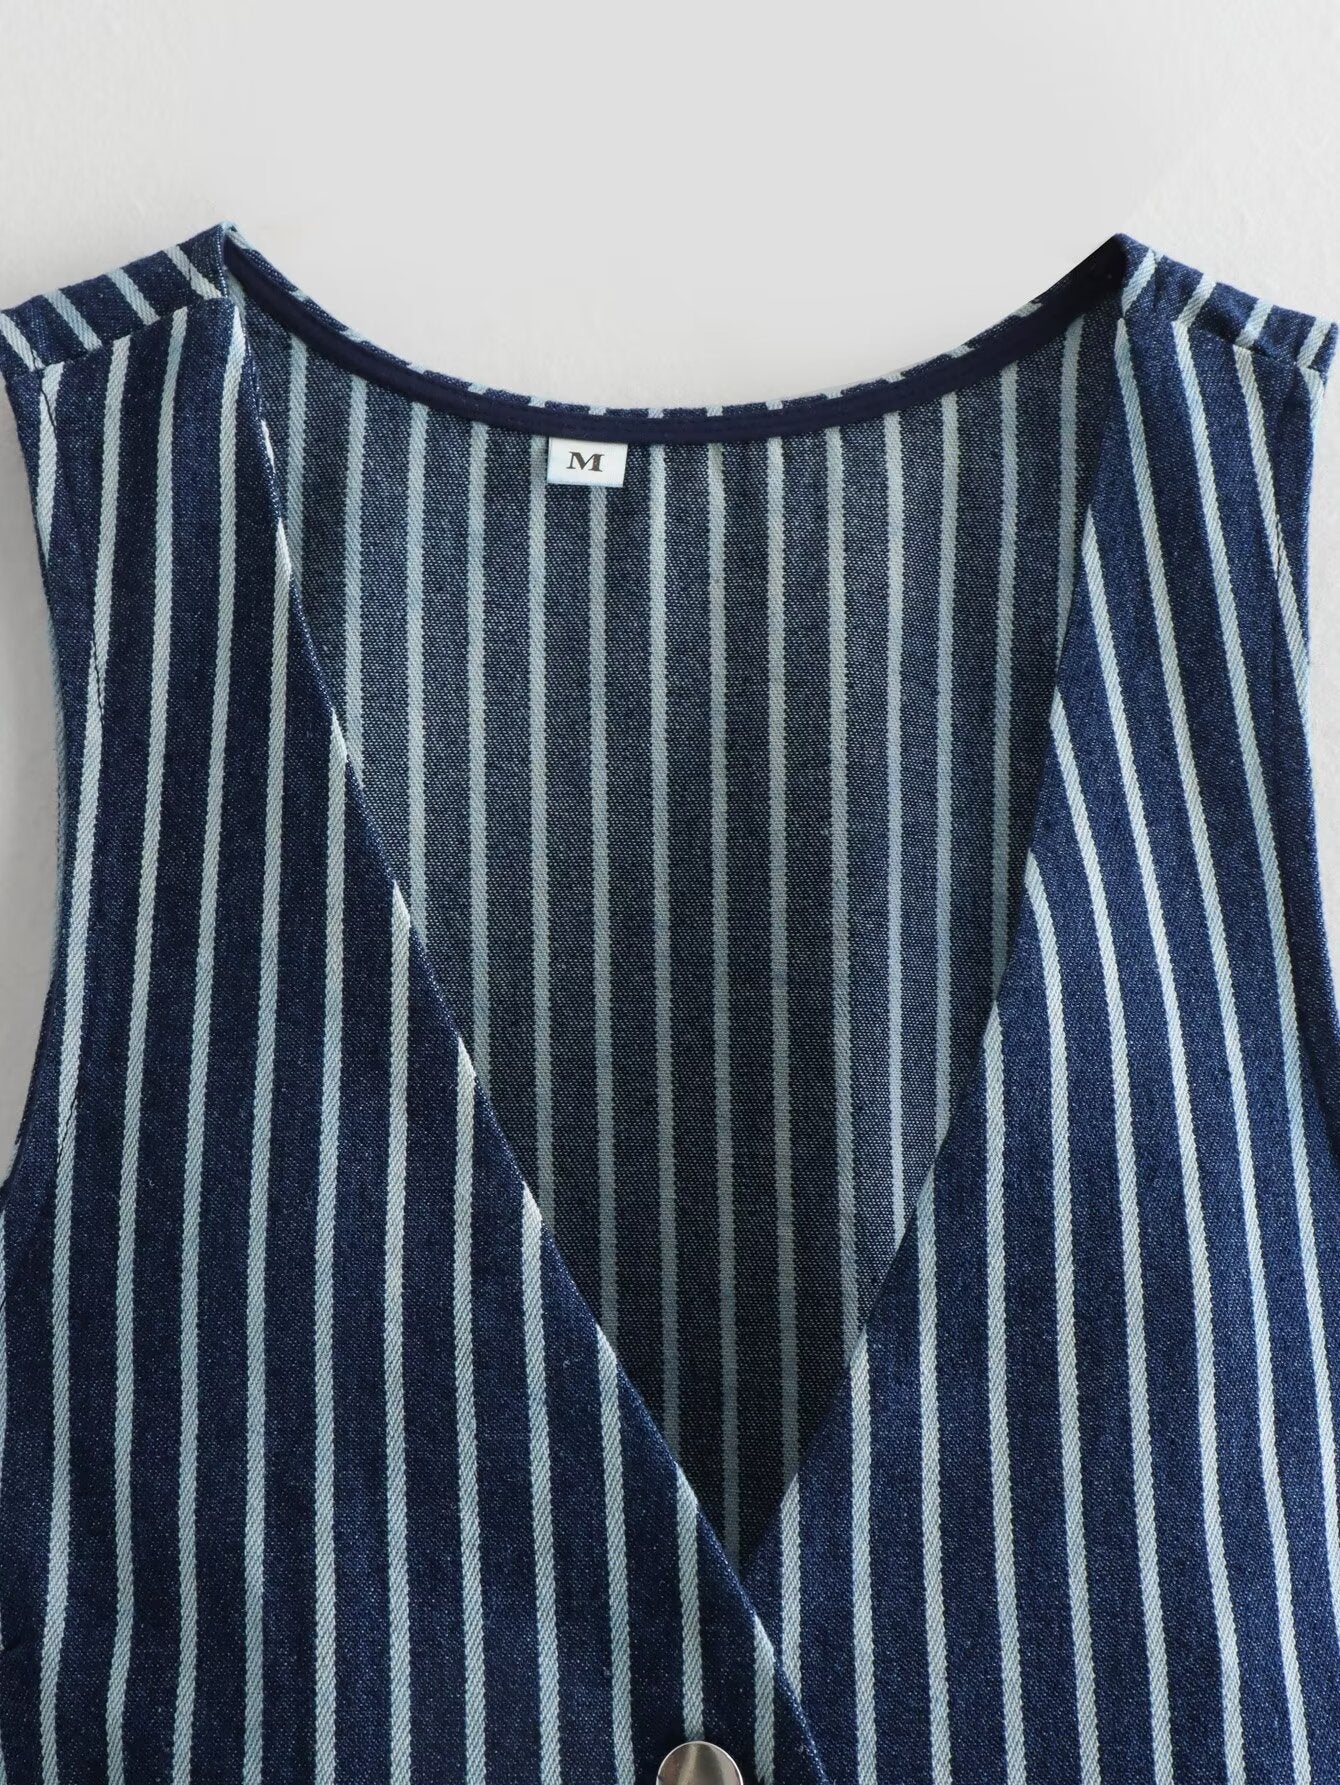 Women Summer Cinched Sleeveless Short Vest Women Striped Cardigan